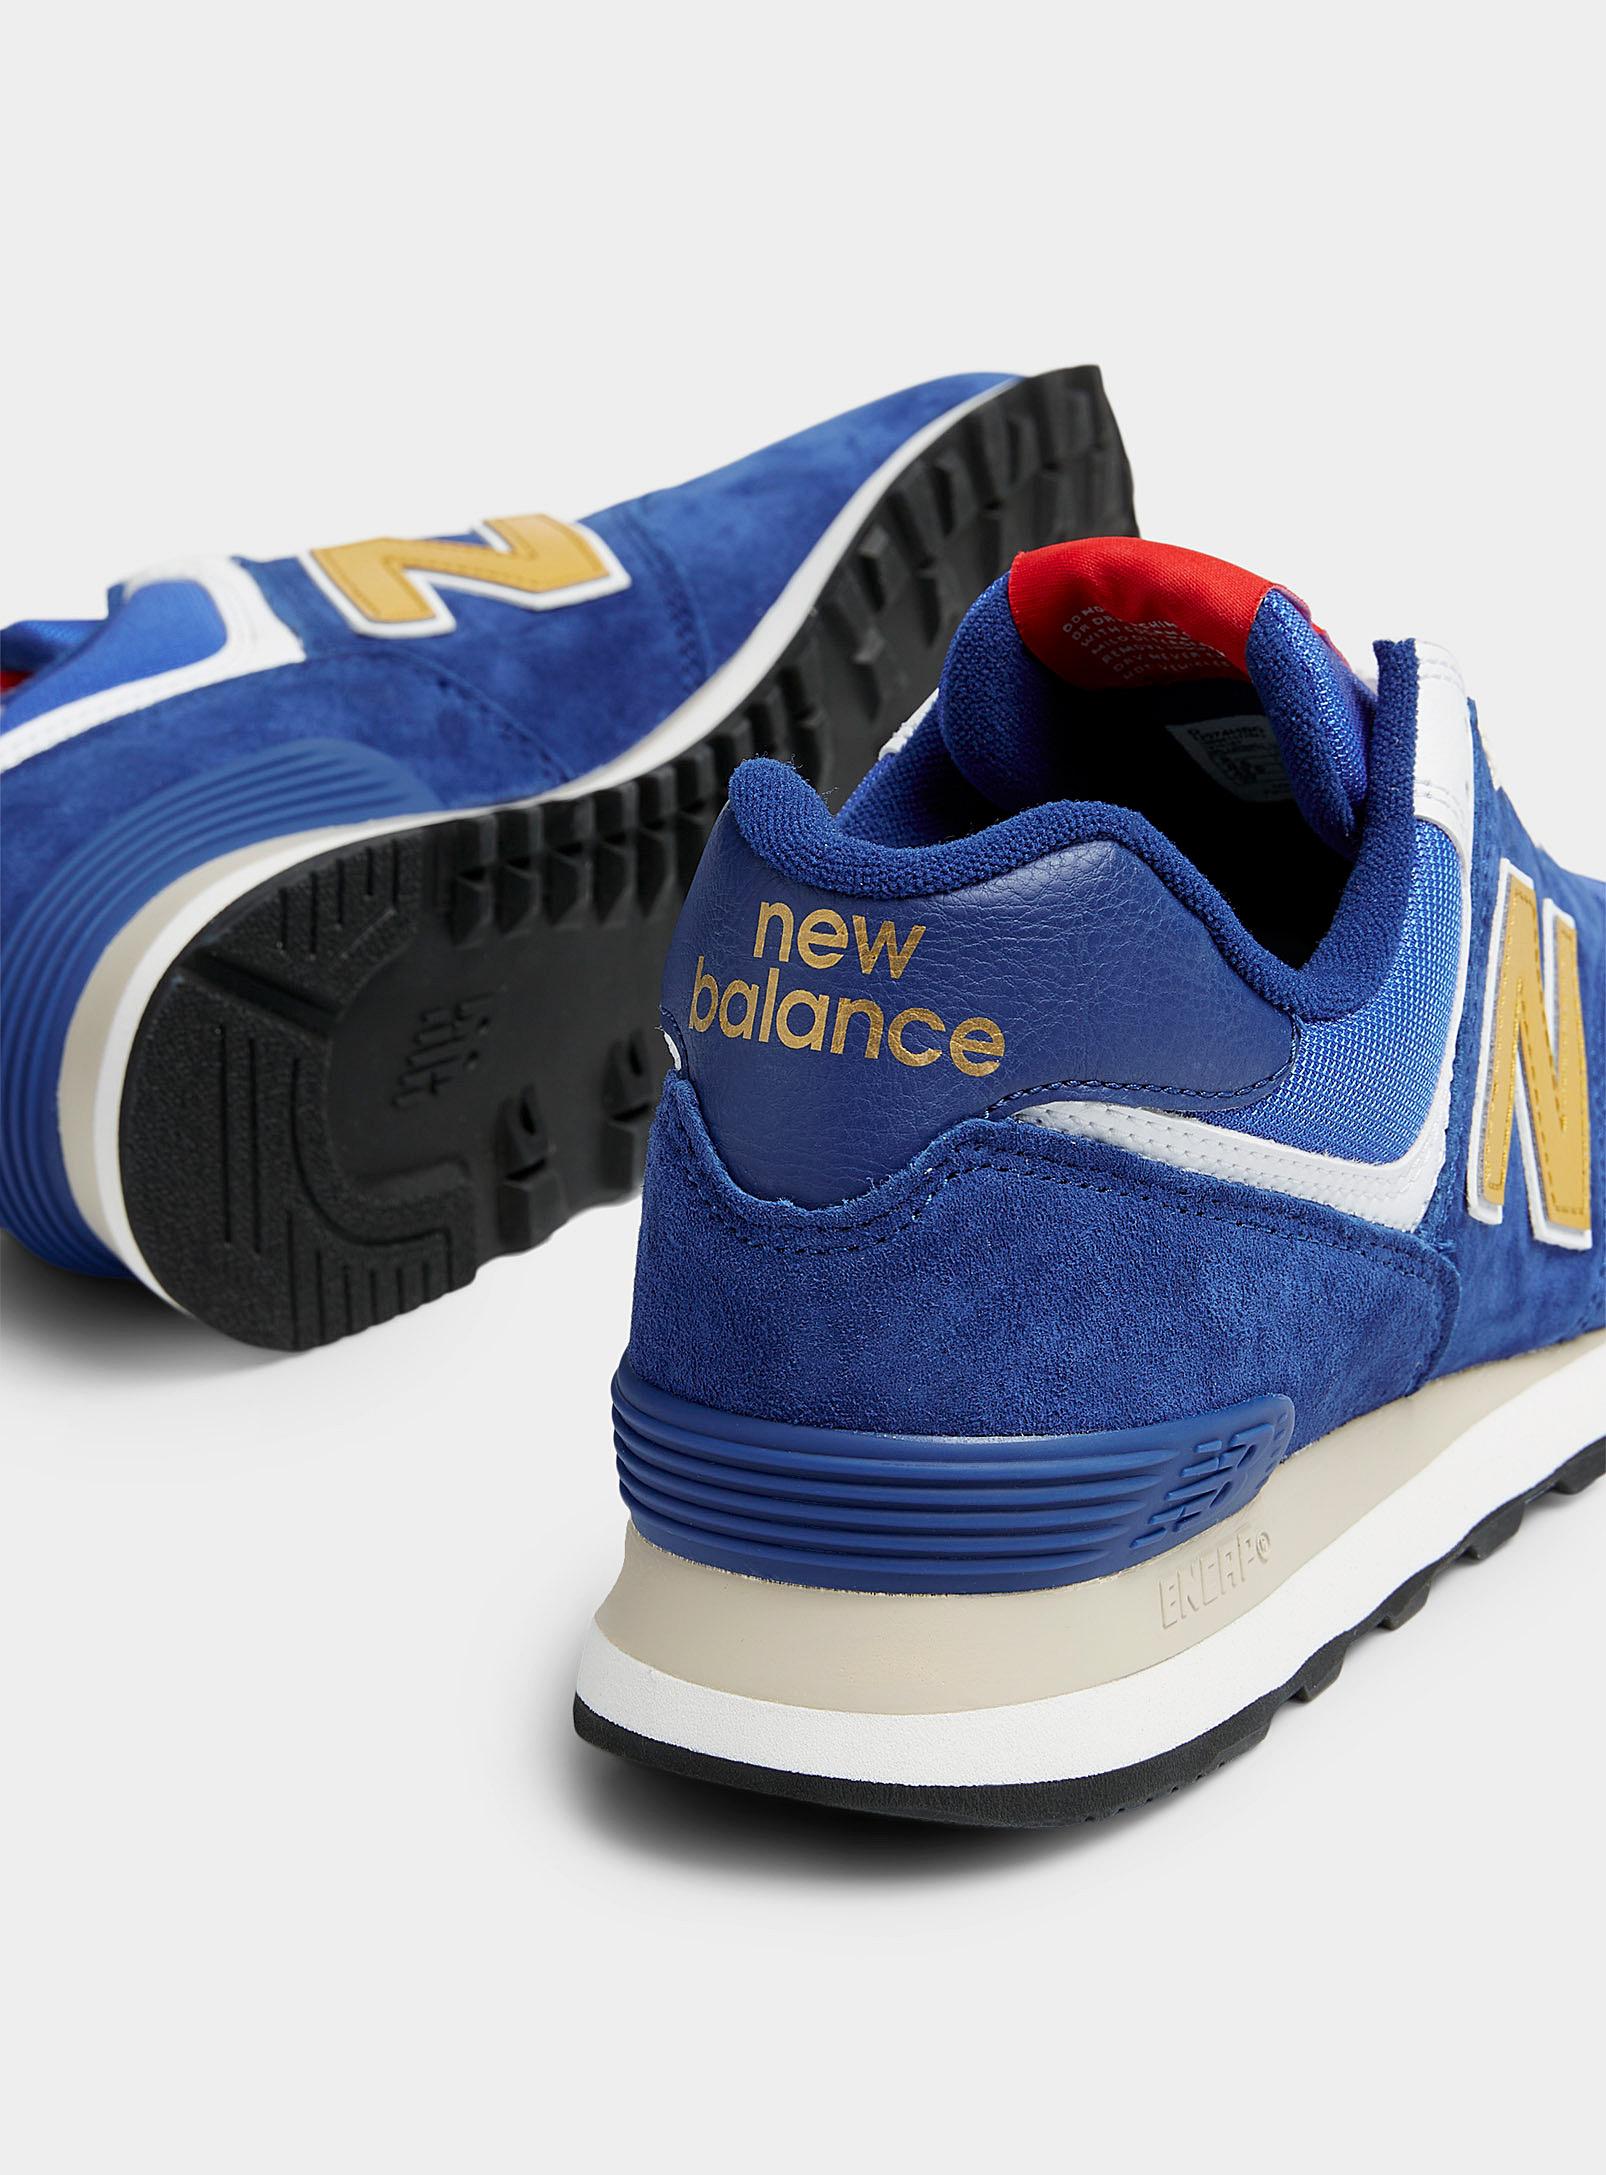 New Balance - Men's Electric blue 574 sneakers Men